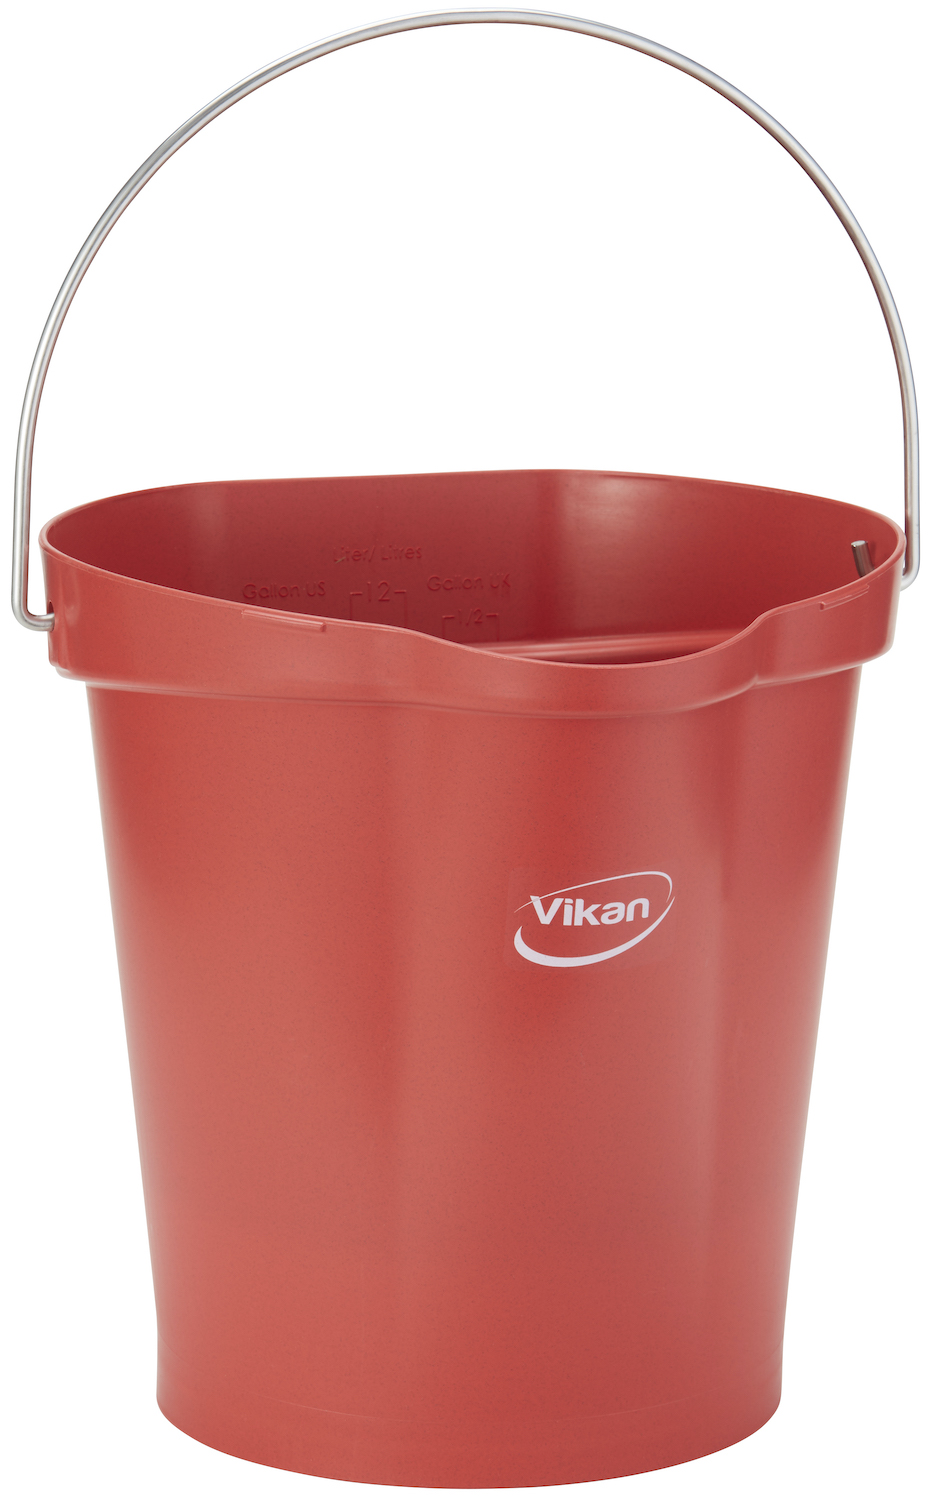 Vikan Bucket, Metal Detectable, 12 Litre, Red